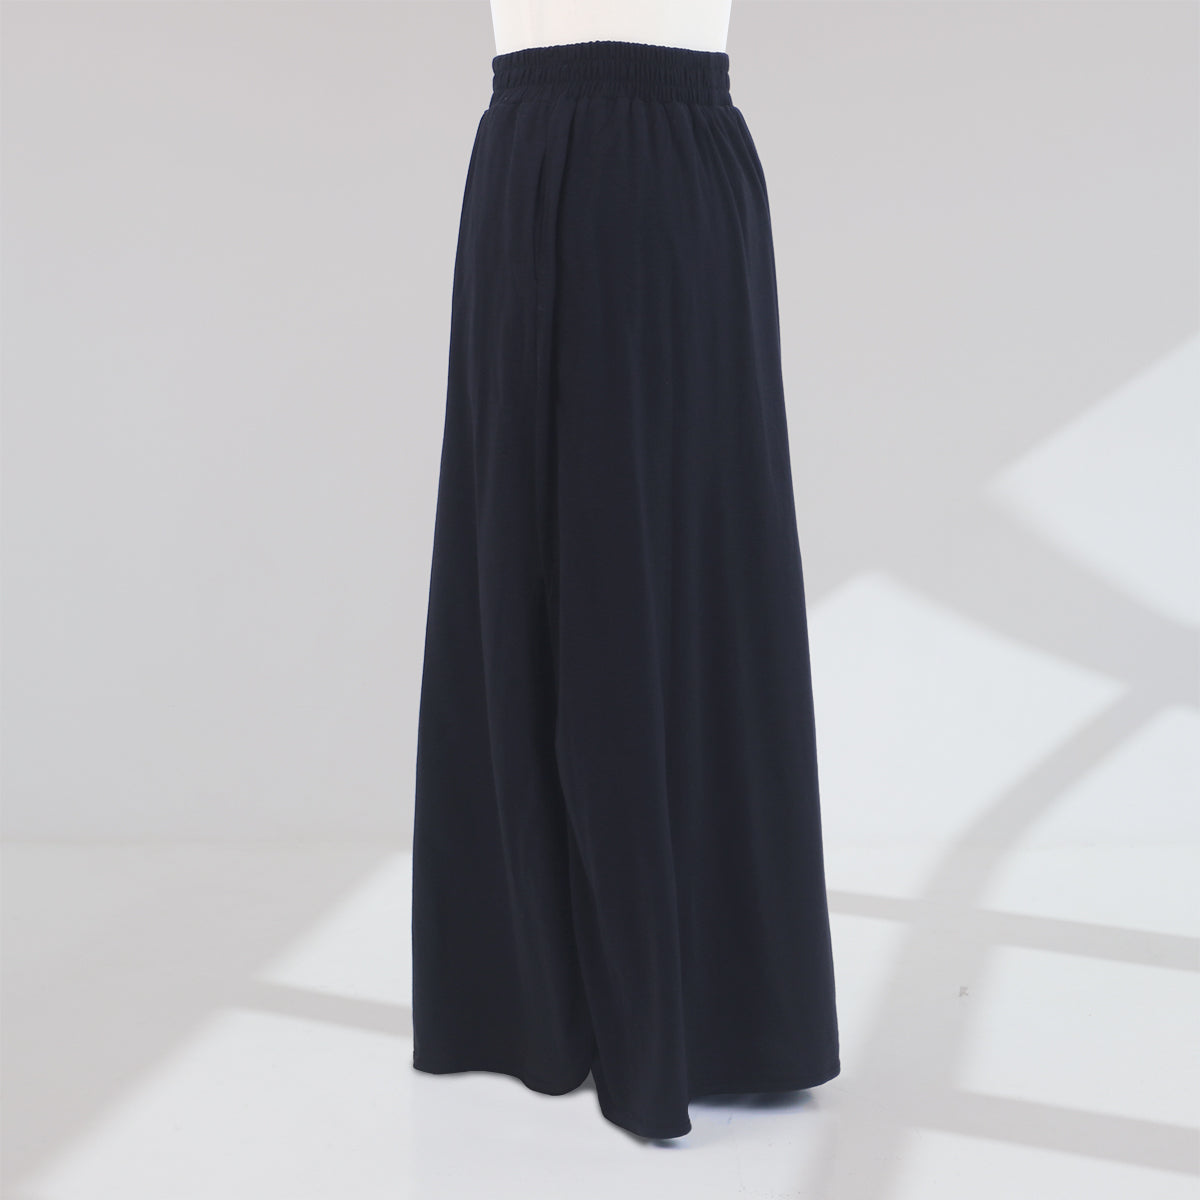 Huri Skirt - Black